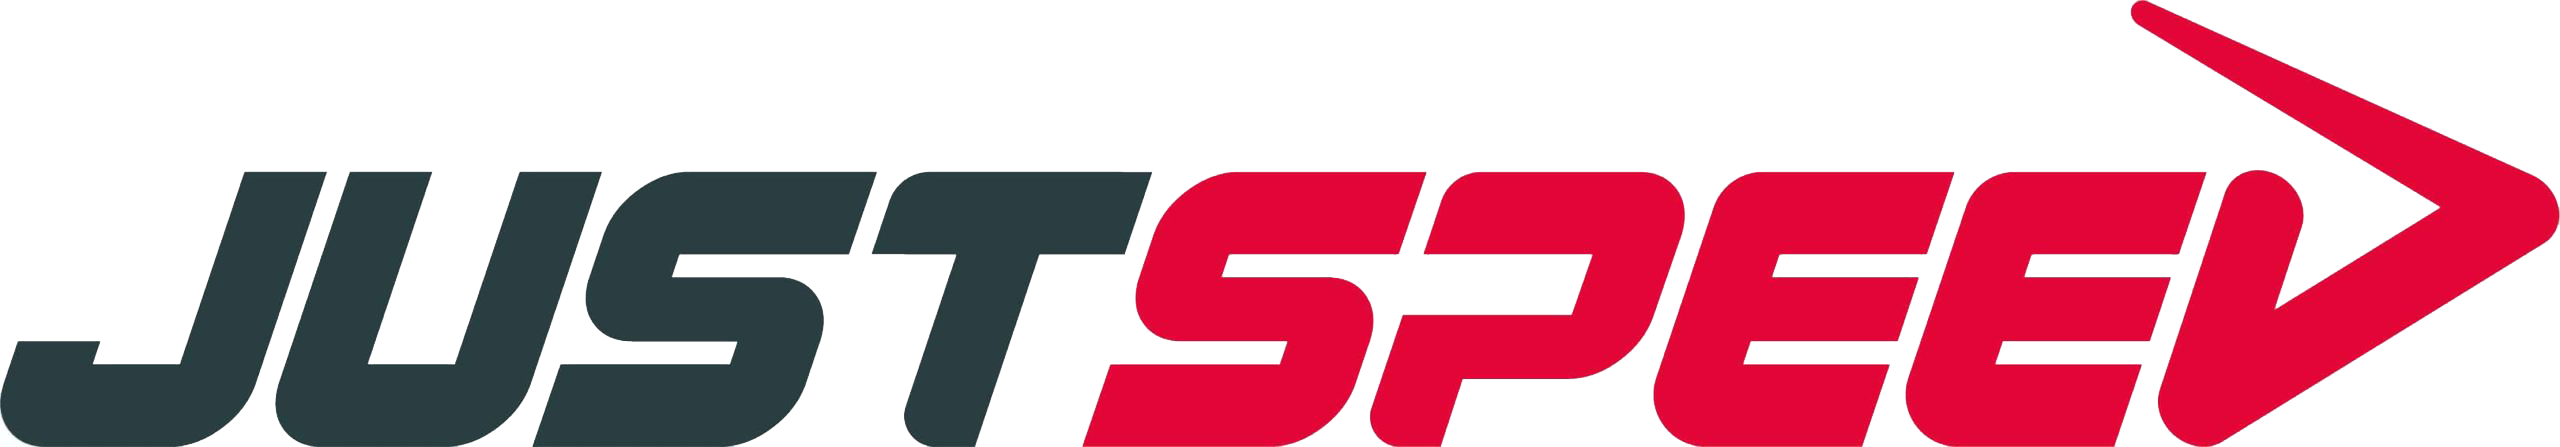 Justspeed Logo